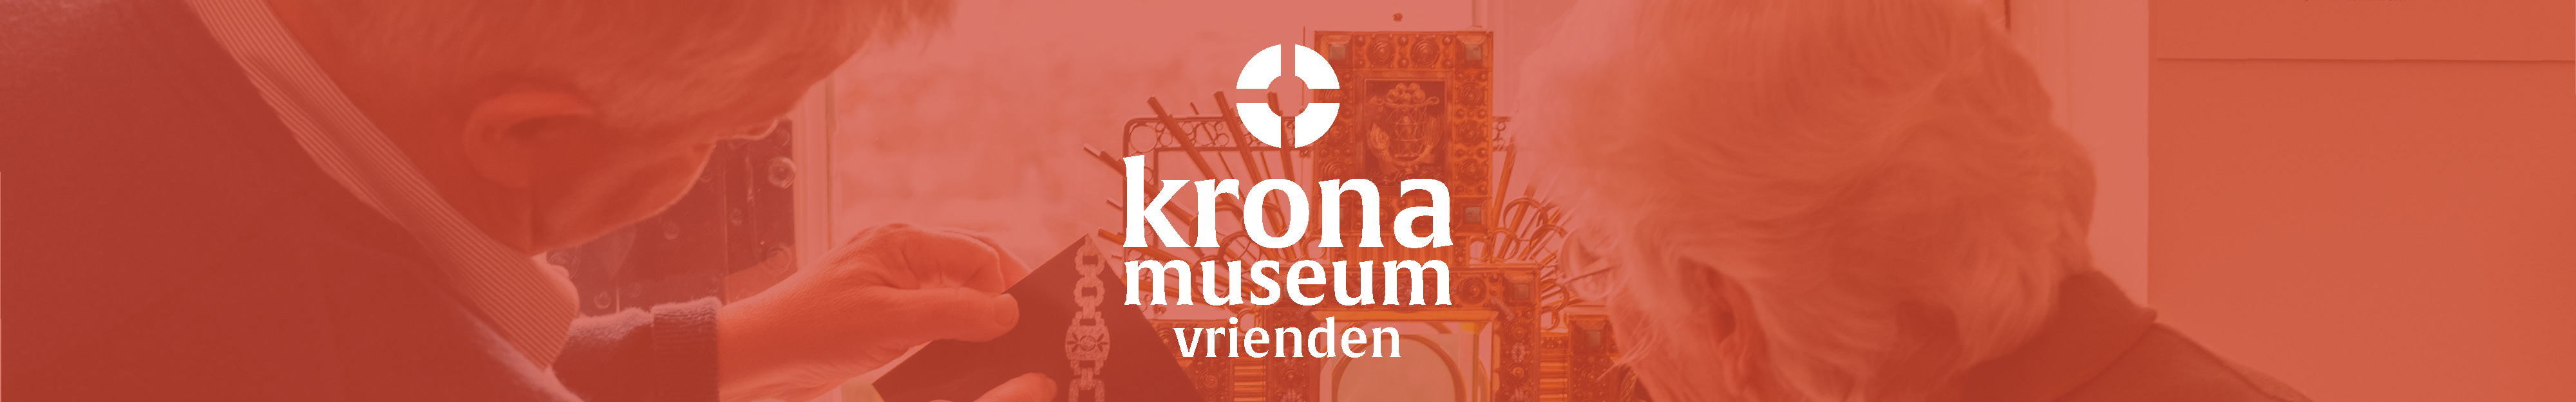 Museum Krona